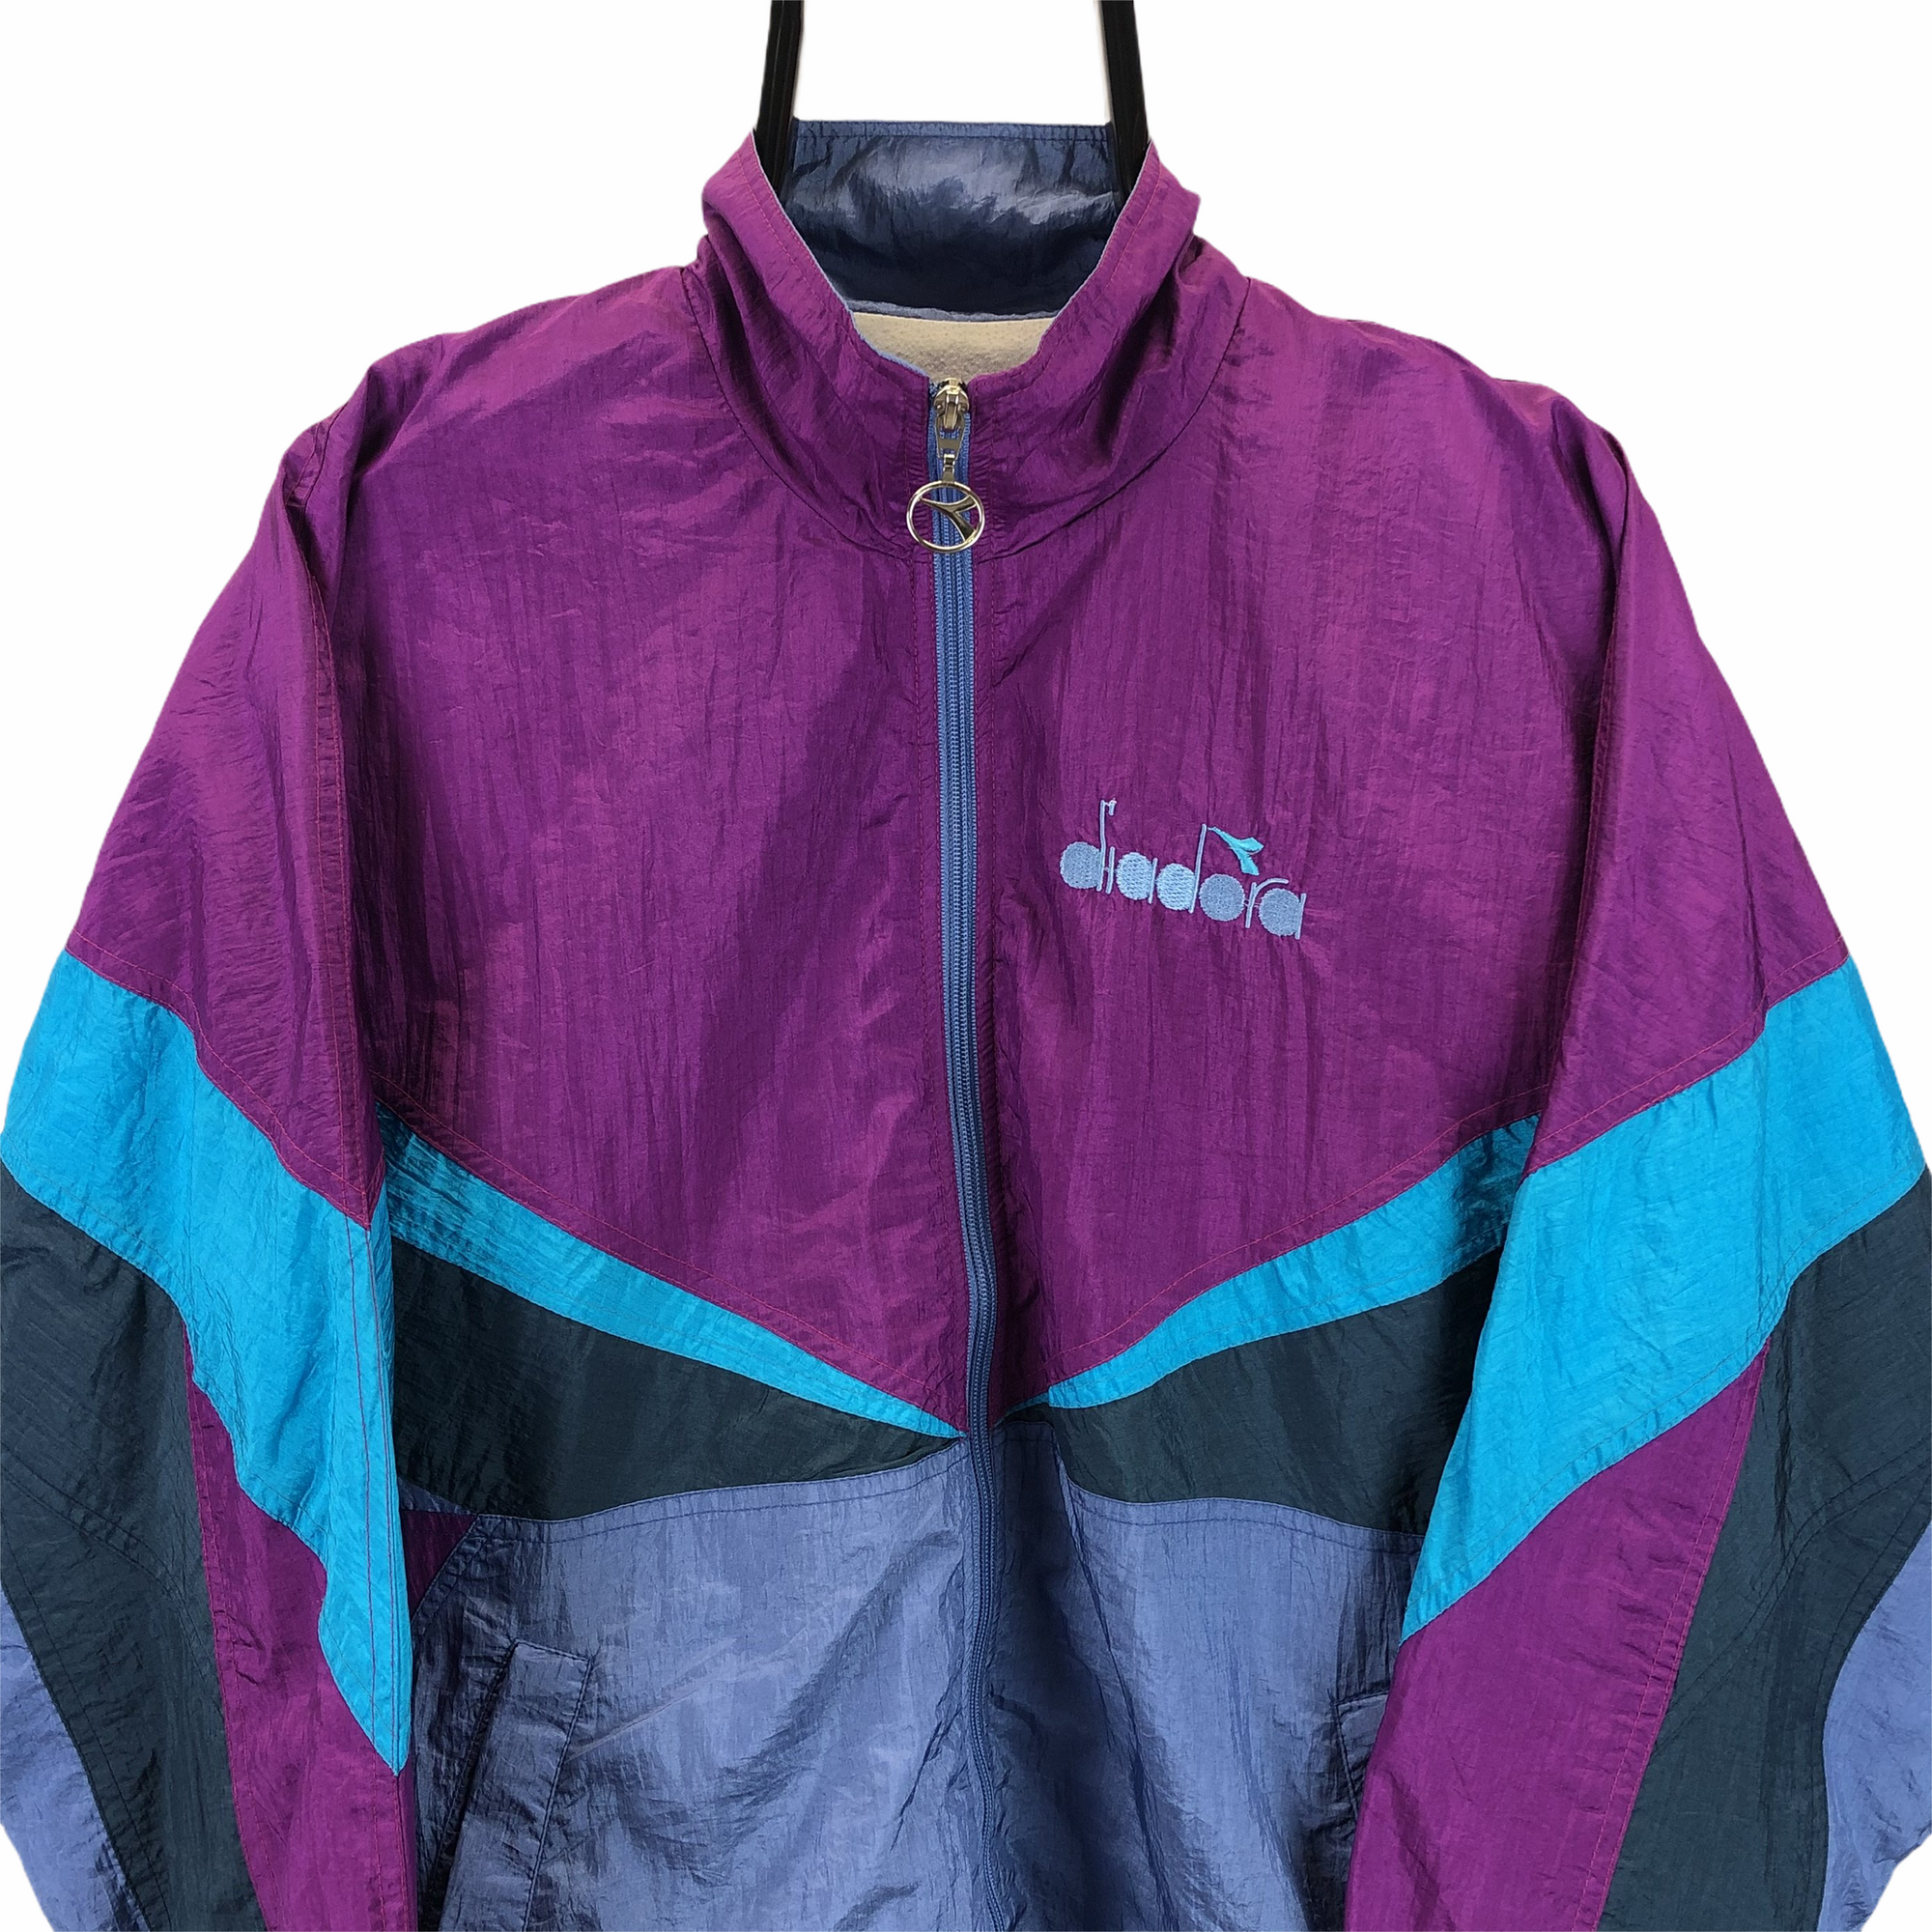 Vintage 80s Diadora Track Jacket - Men's Medium/Women's Large